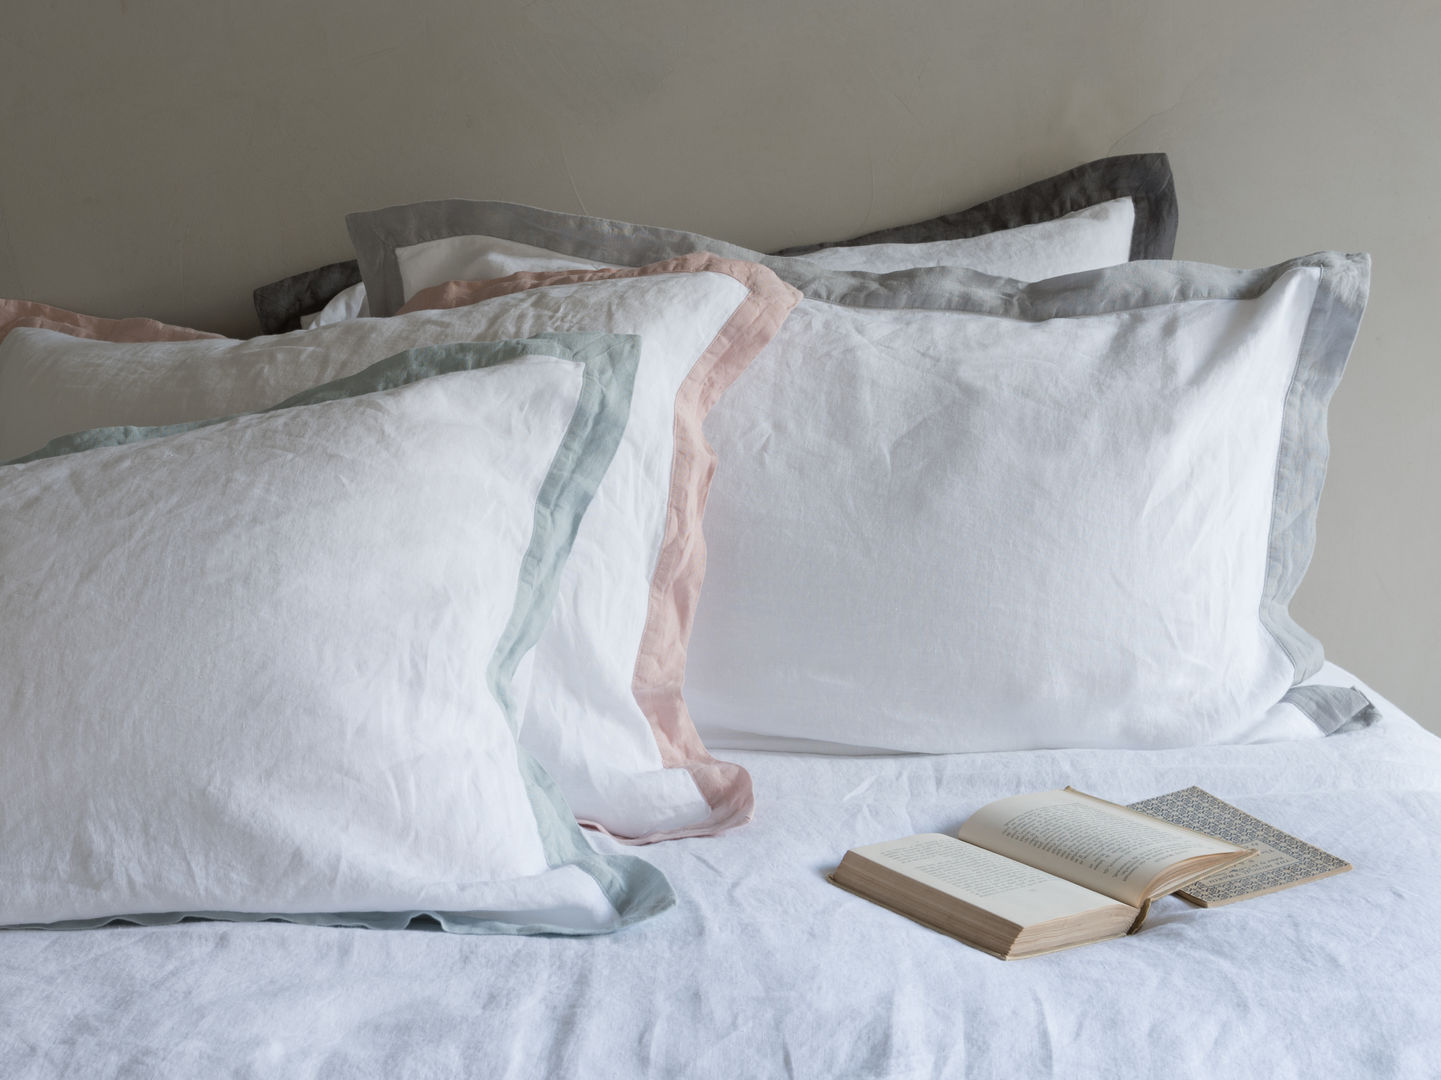 Lazy Daze bed linen Loaf Modern Yatak Odası bedding,bedlinen,linen,trimming,grey,pink,charcoal,blue